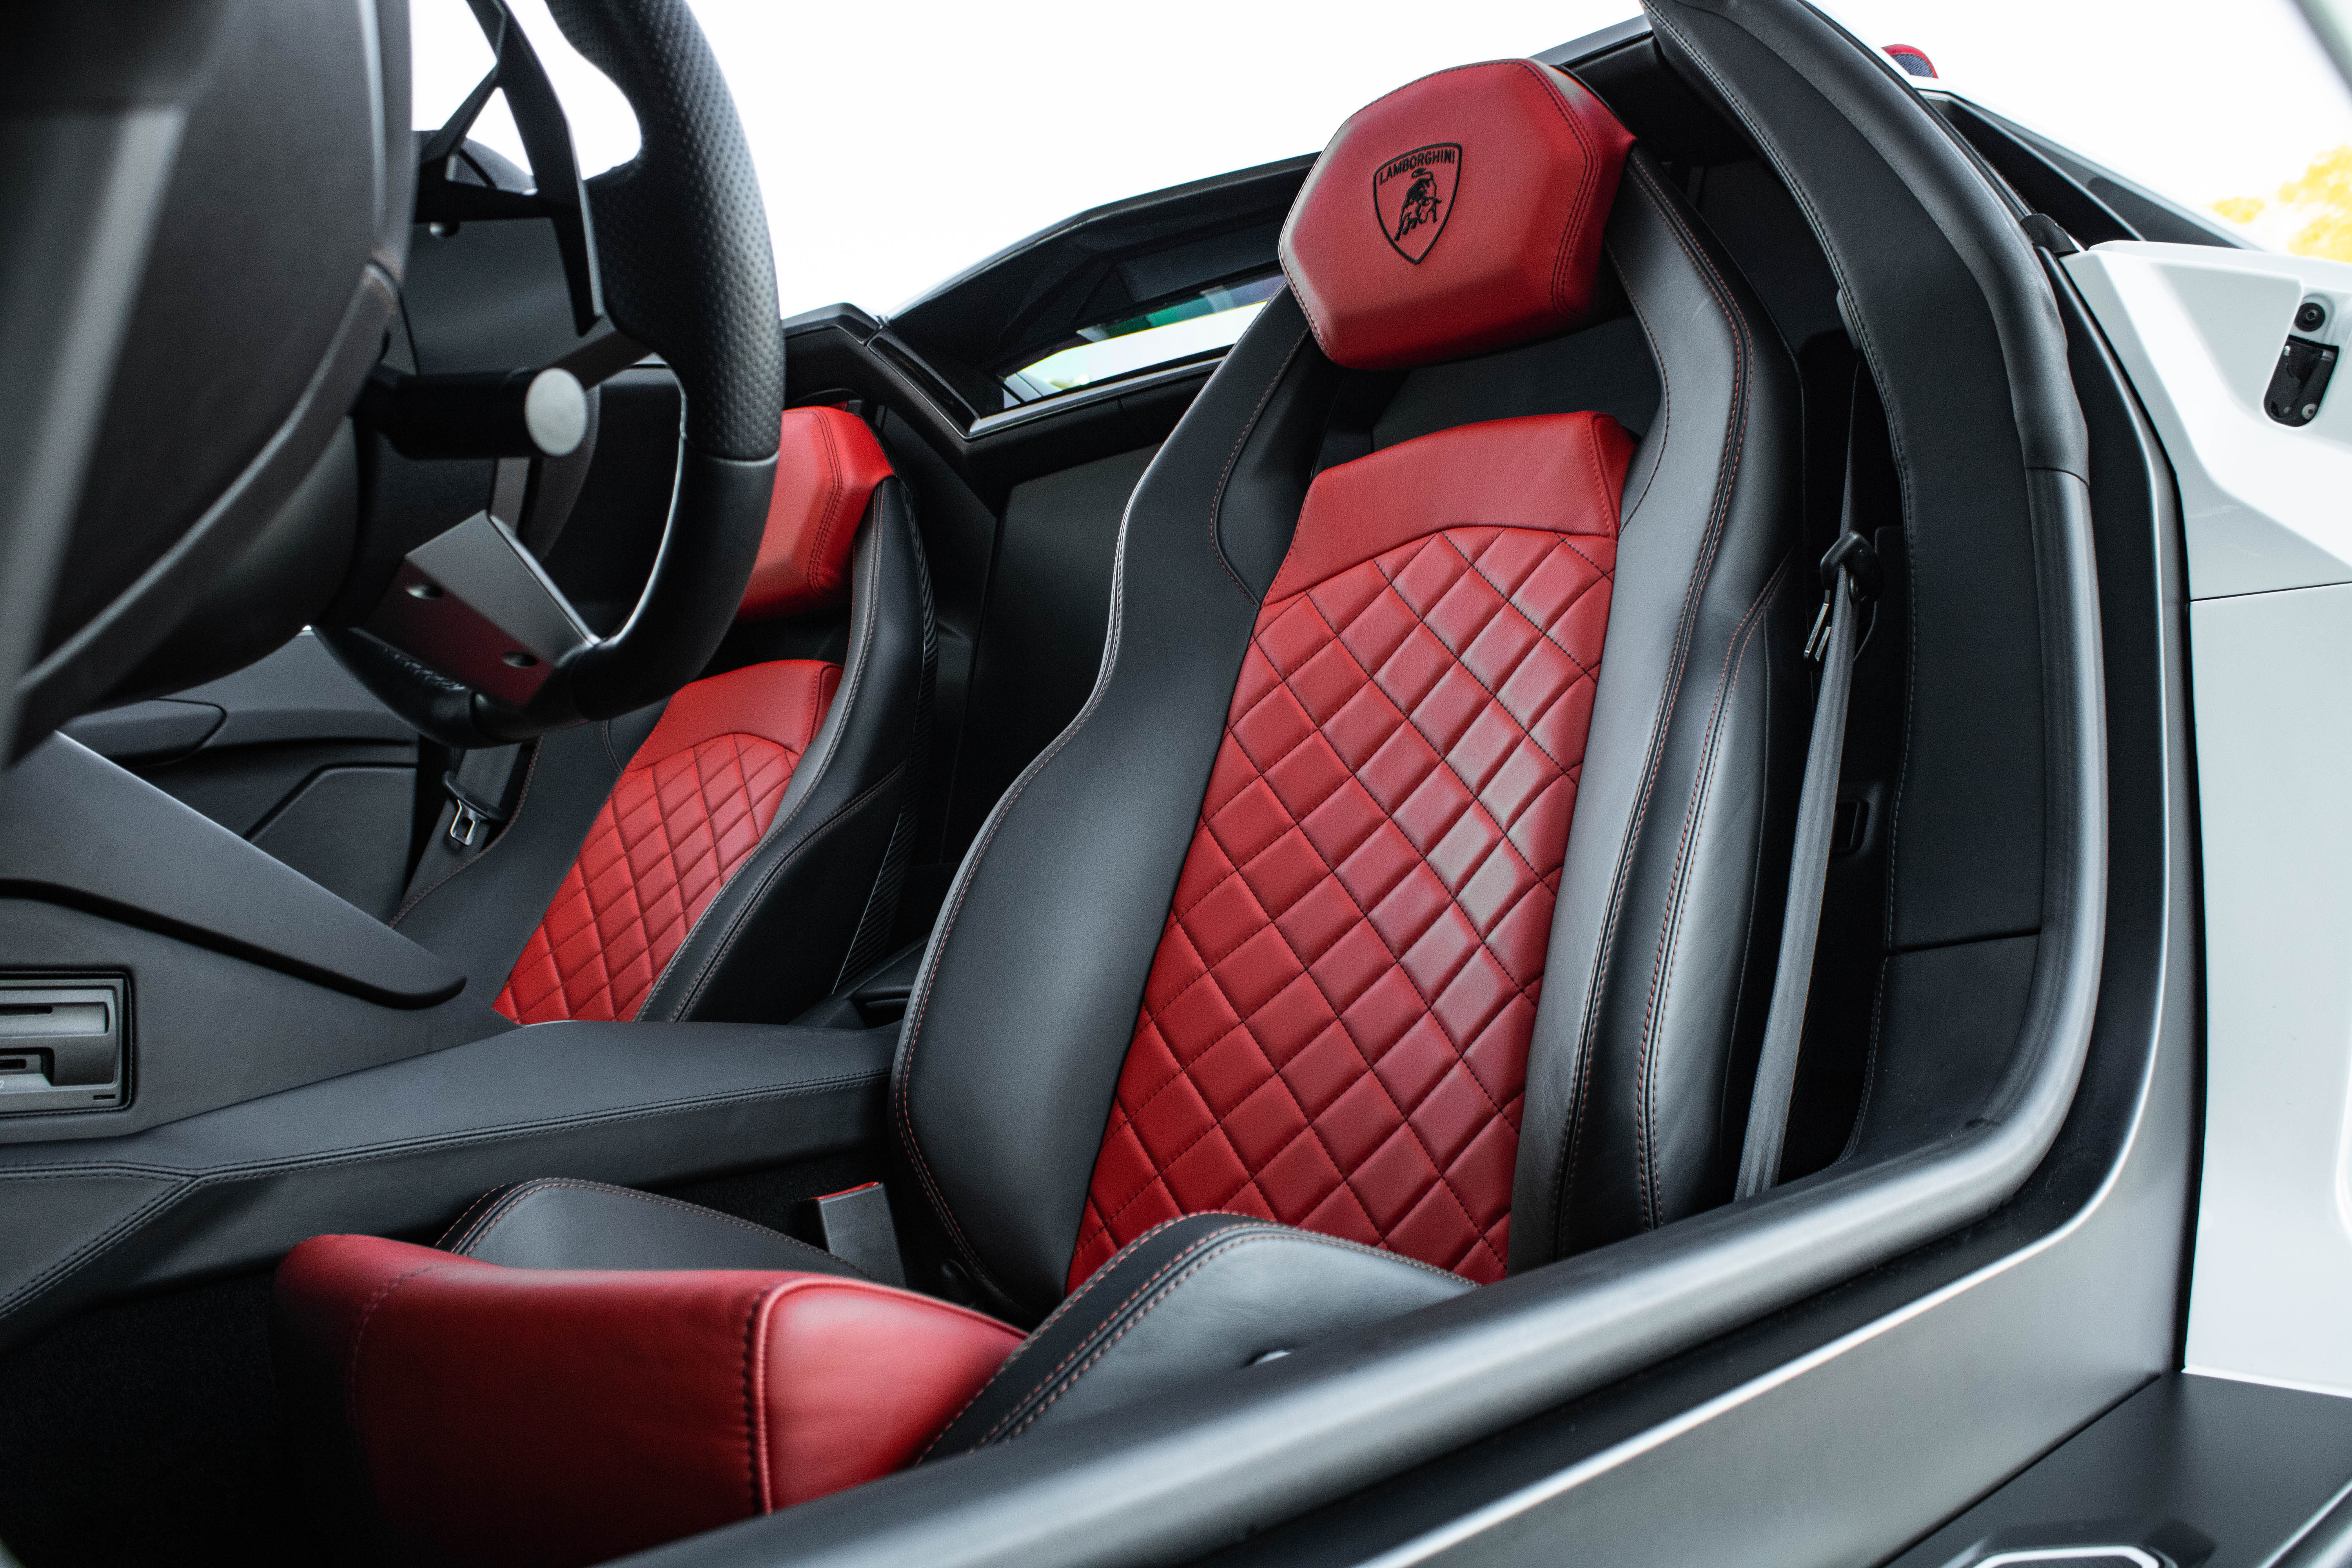 2015AventadorLP700-4 Roadster Pirelli Edition